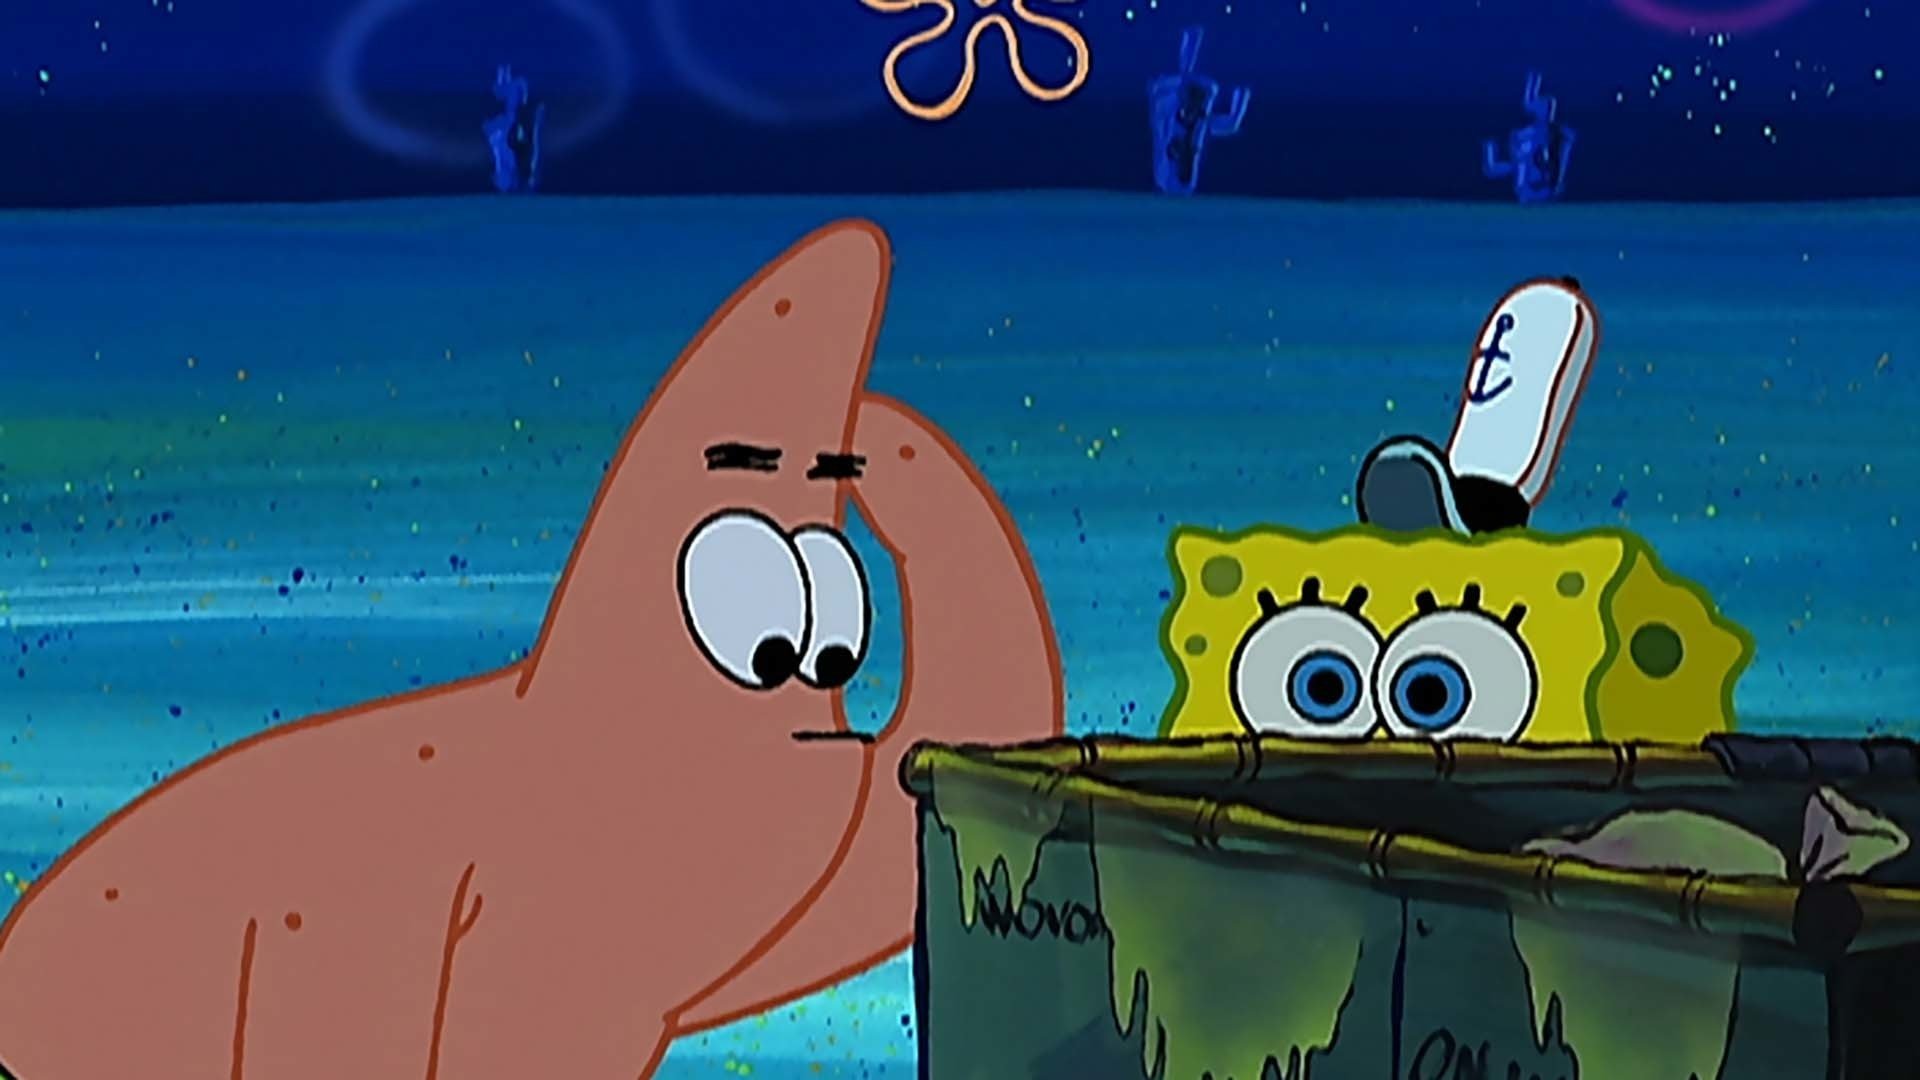 spongebob season 9 ep39 sold